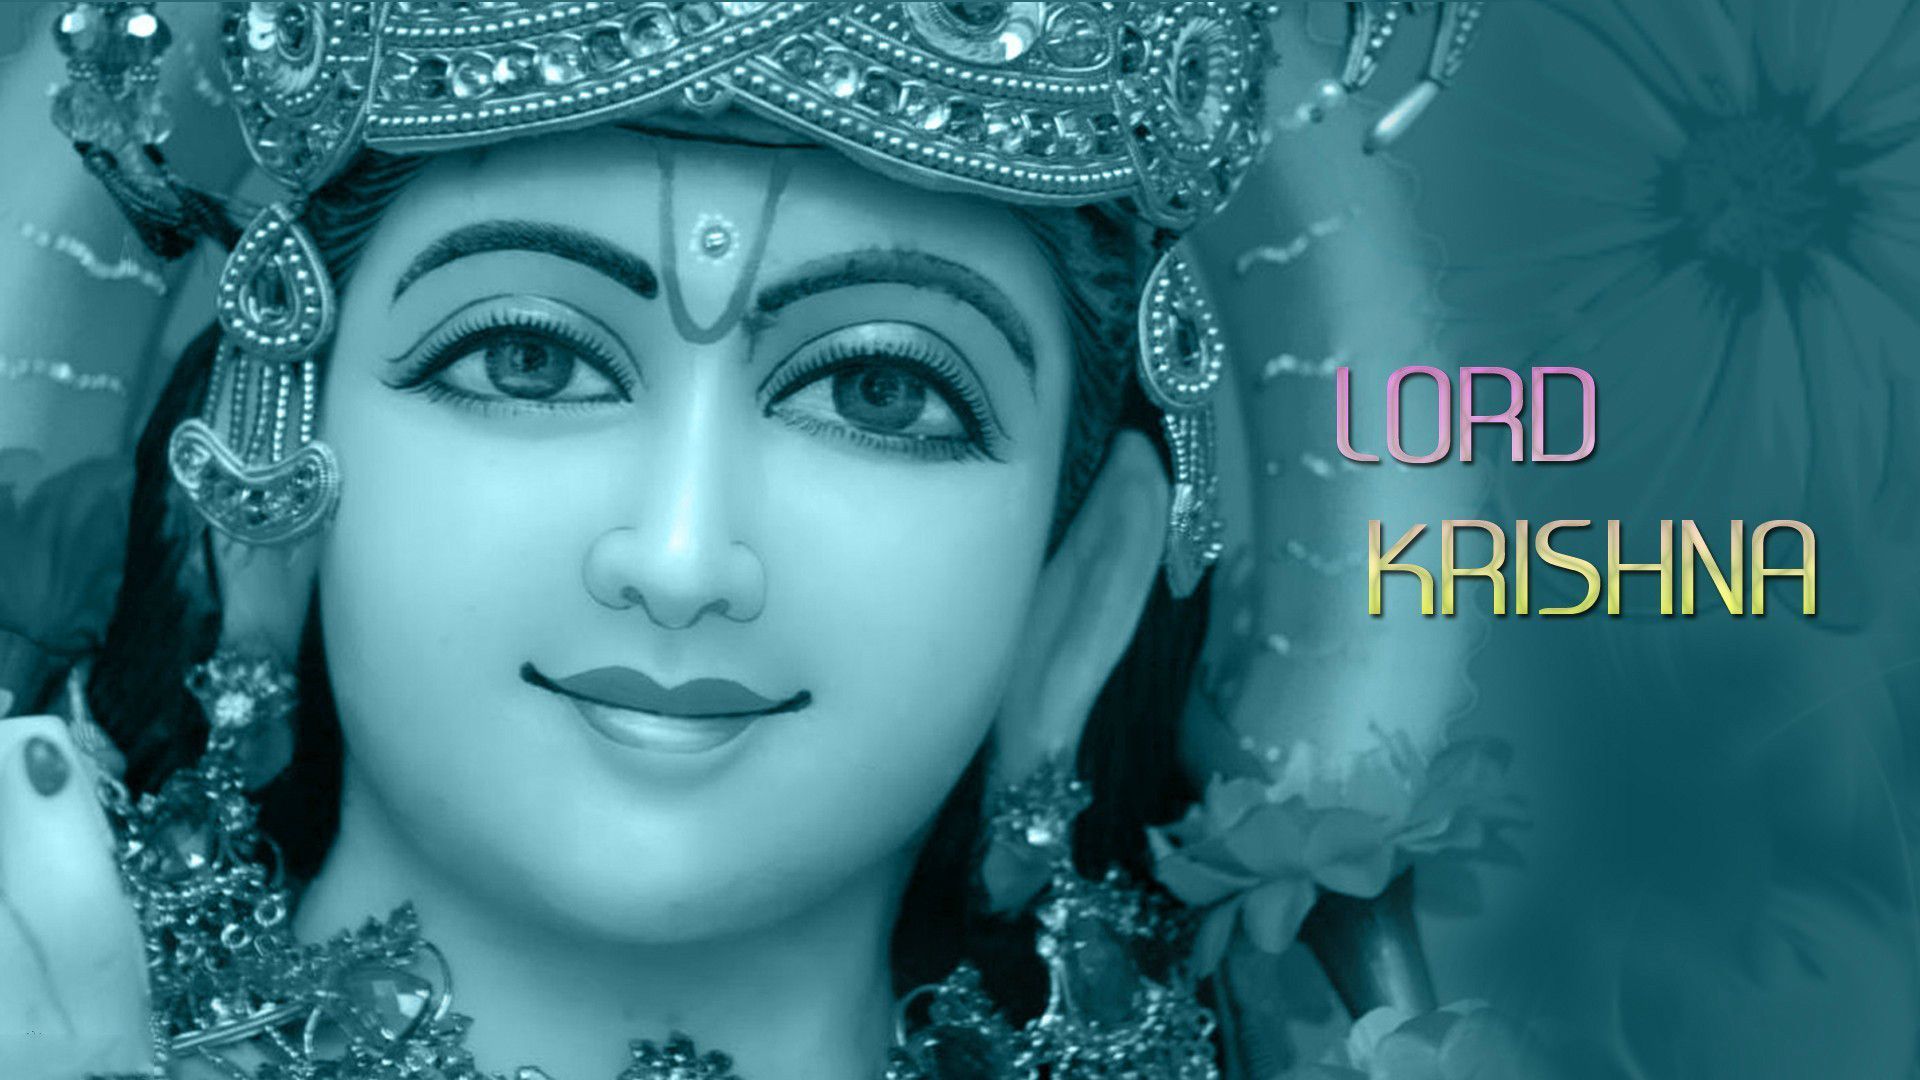 HD Lord Krishna Image Photo Wallpaper